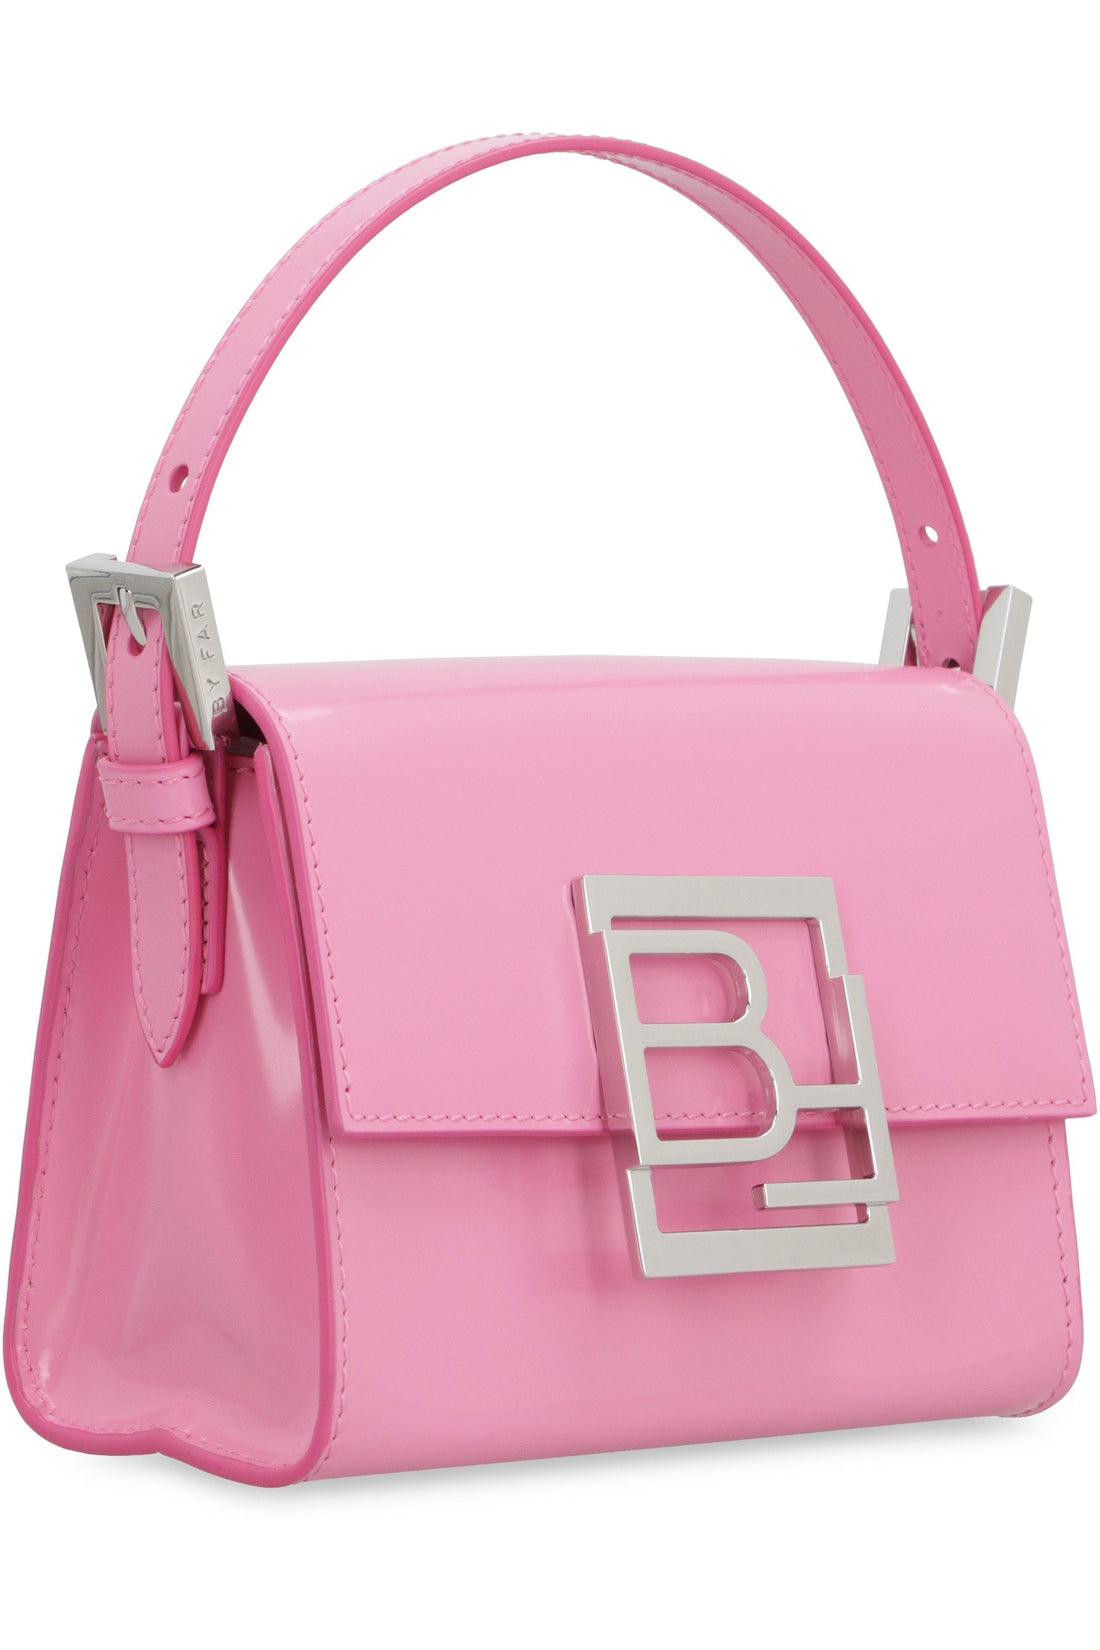 BY FAR-OUTLET-SALE-Fran patent leather handbag-ARCHIVIST